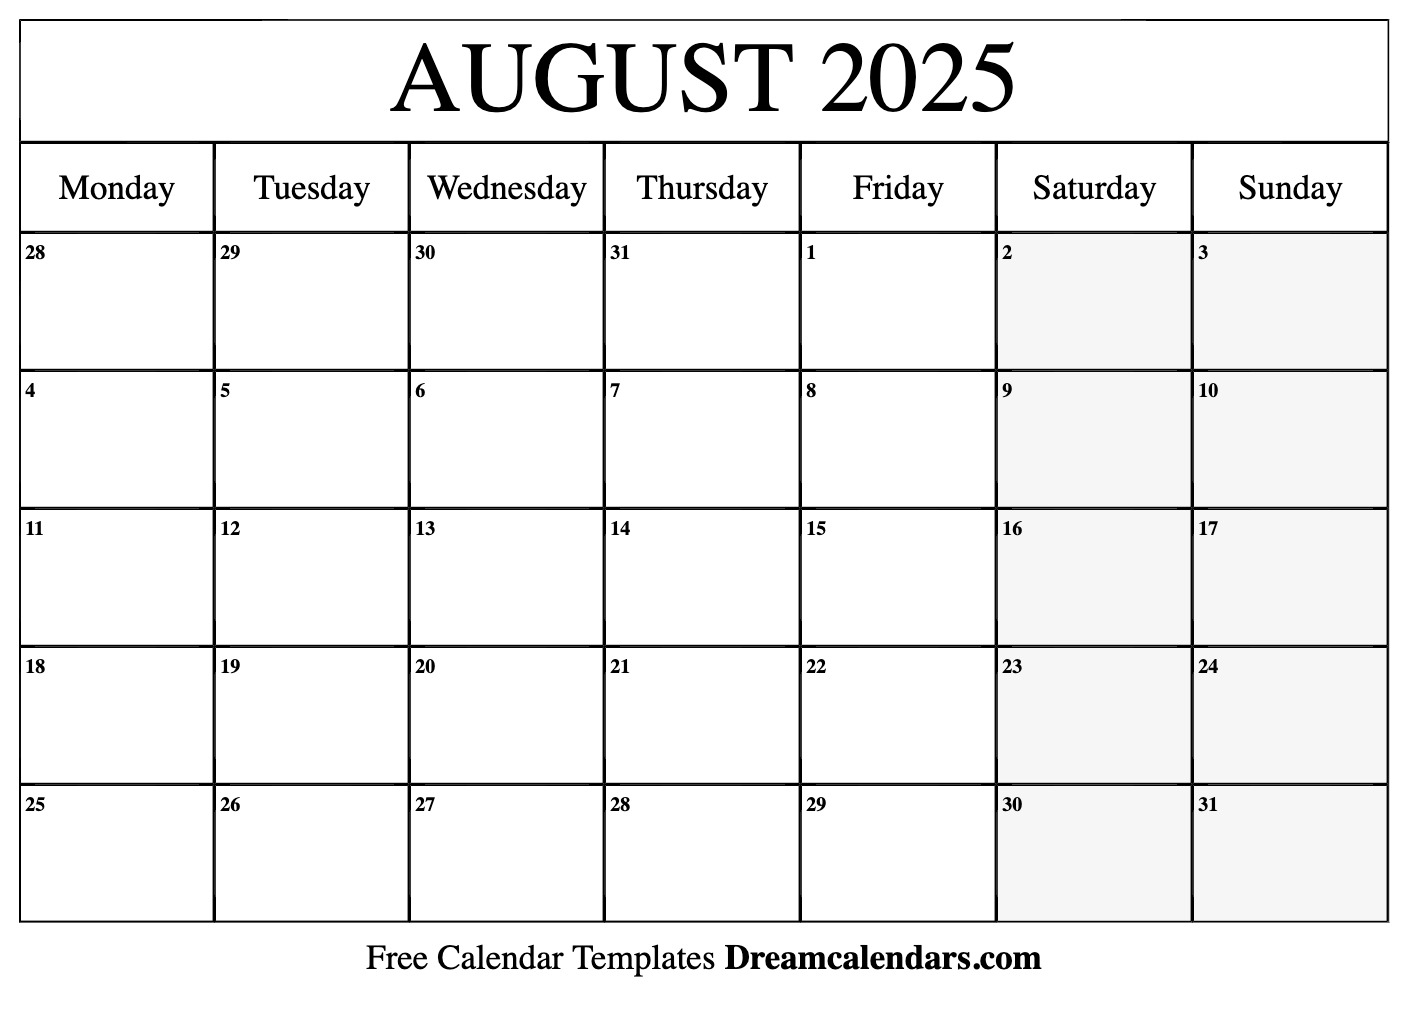 august-2025-calendar-with-holidays-monthly-printable-calendar